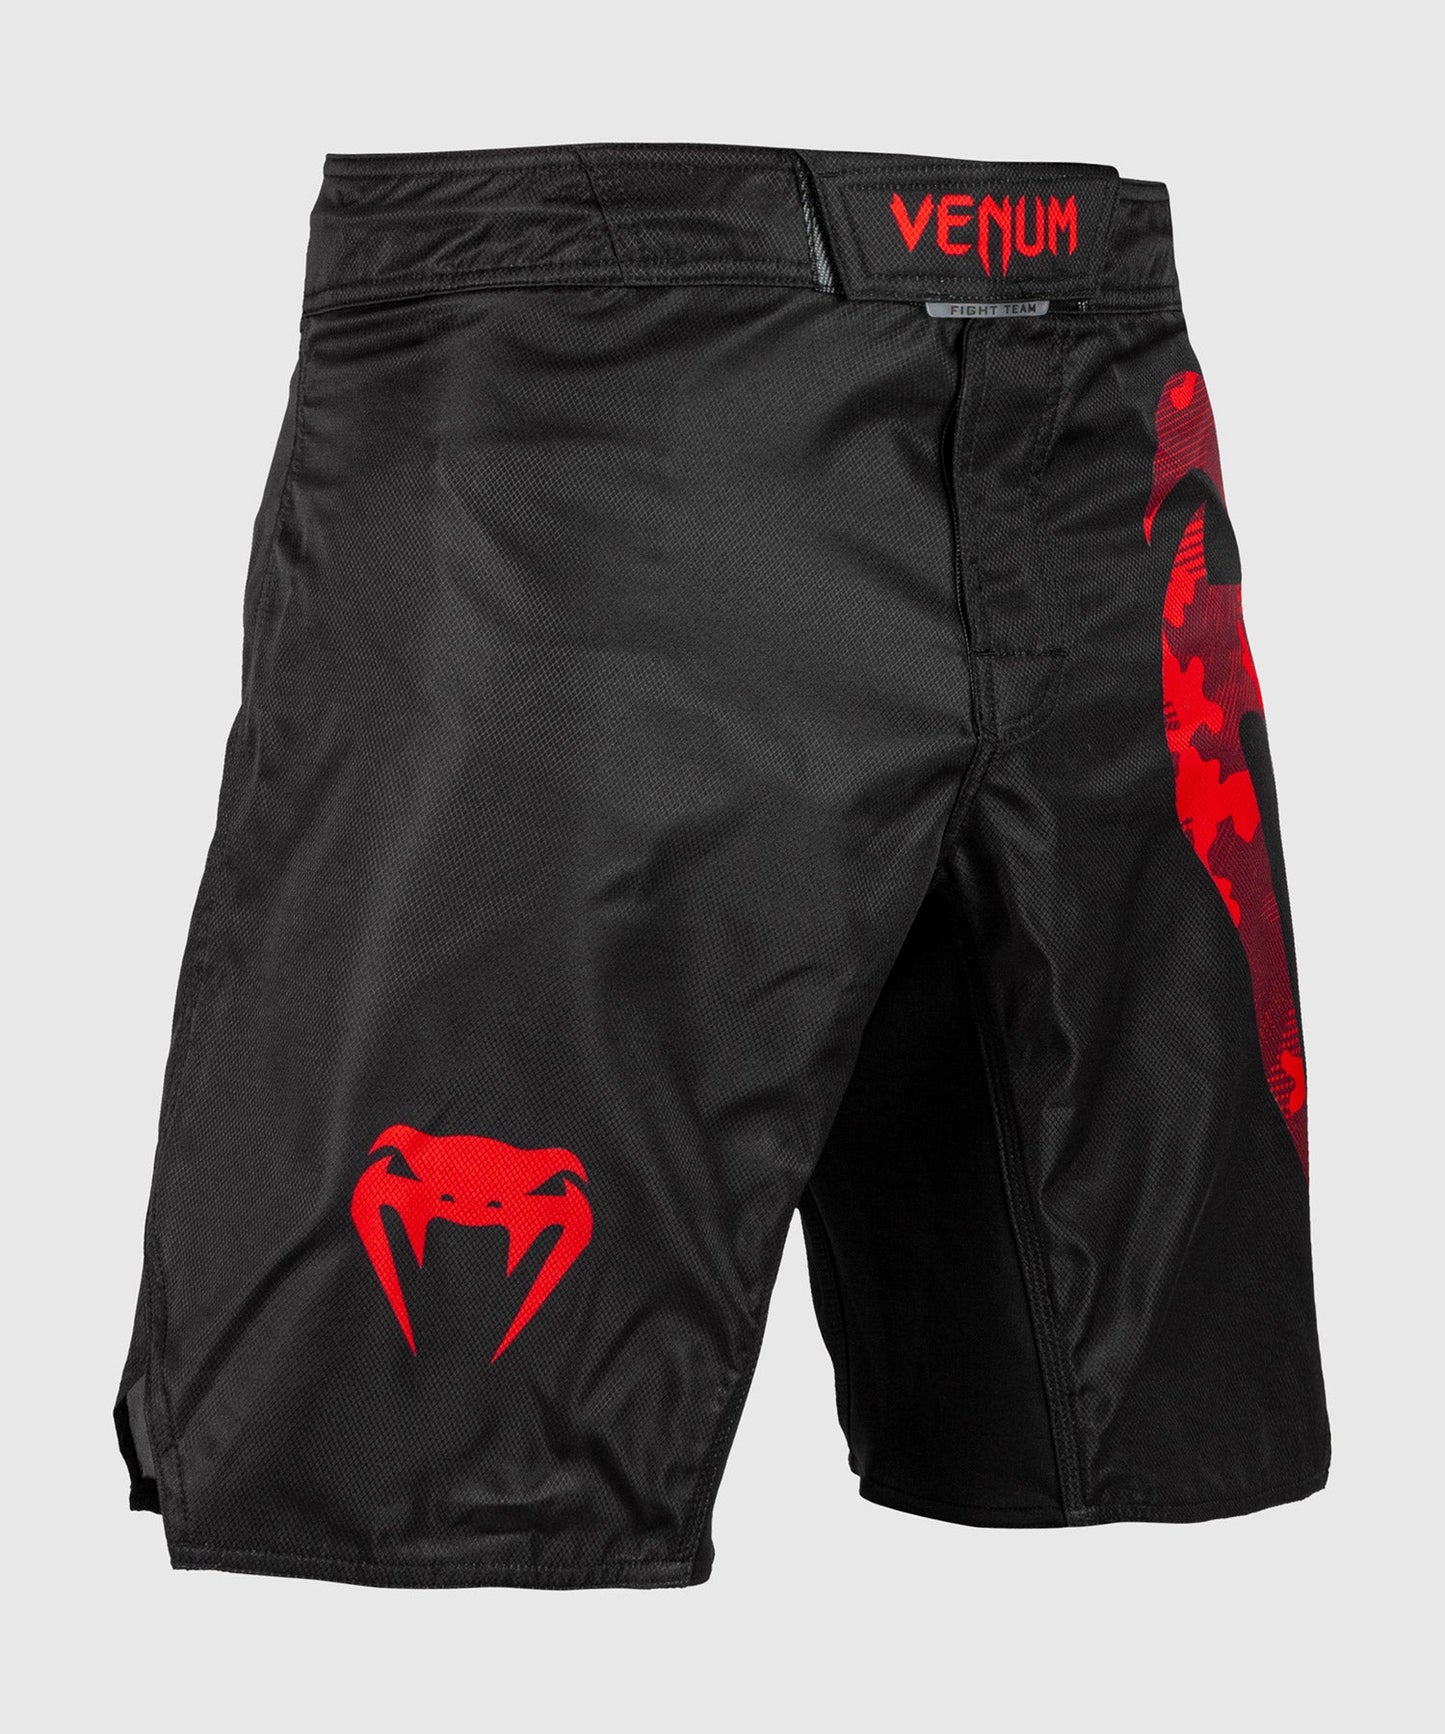 Venum Light 3.0 Fightshorts - Black/Red